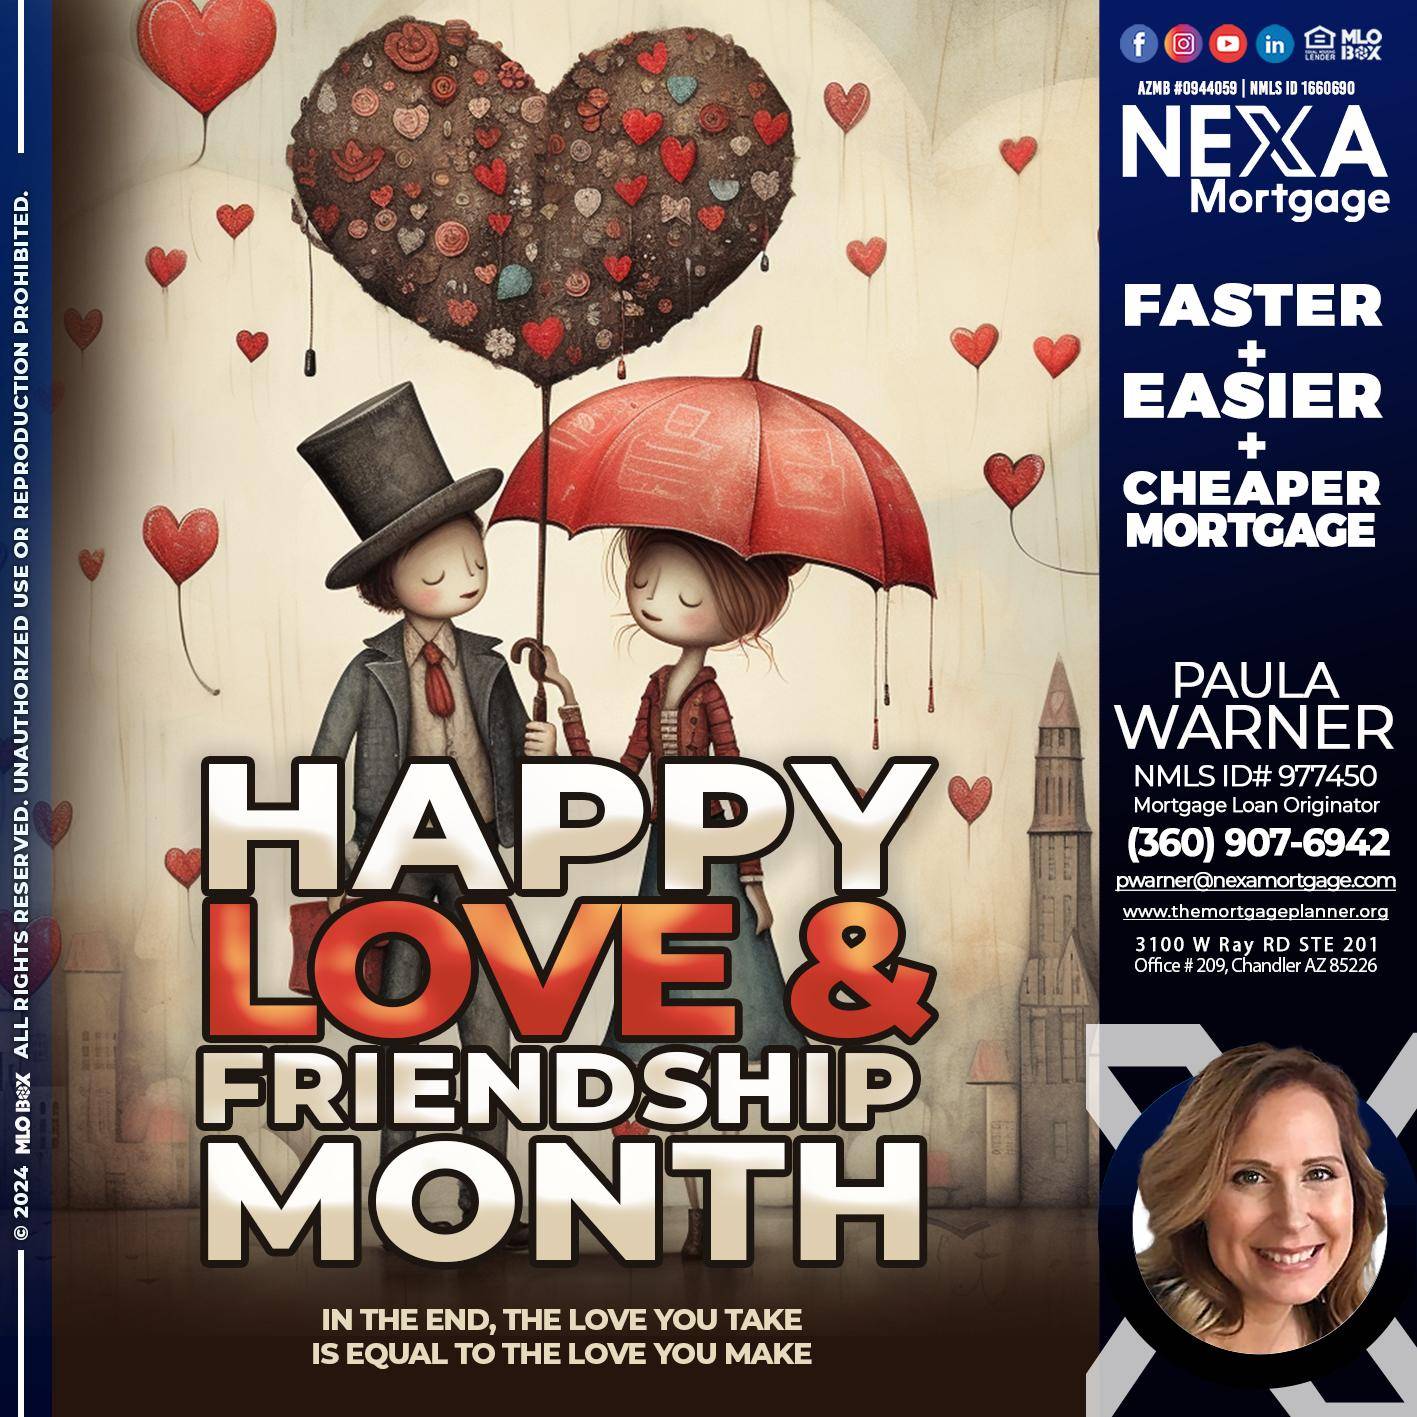 HAPPY LOVE MONTH - Paula Warner -Mortgage Loan Originator